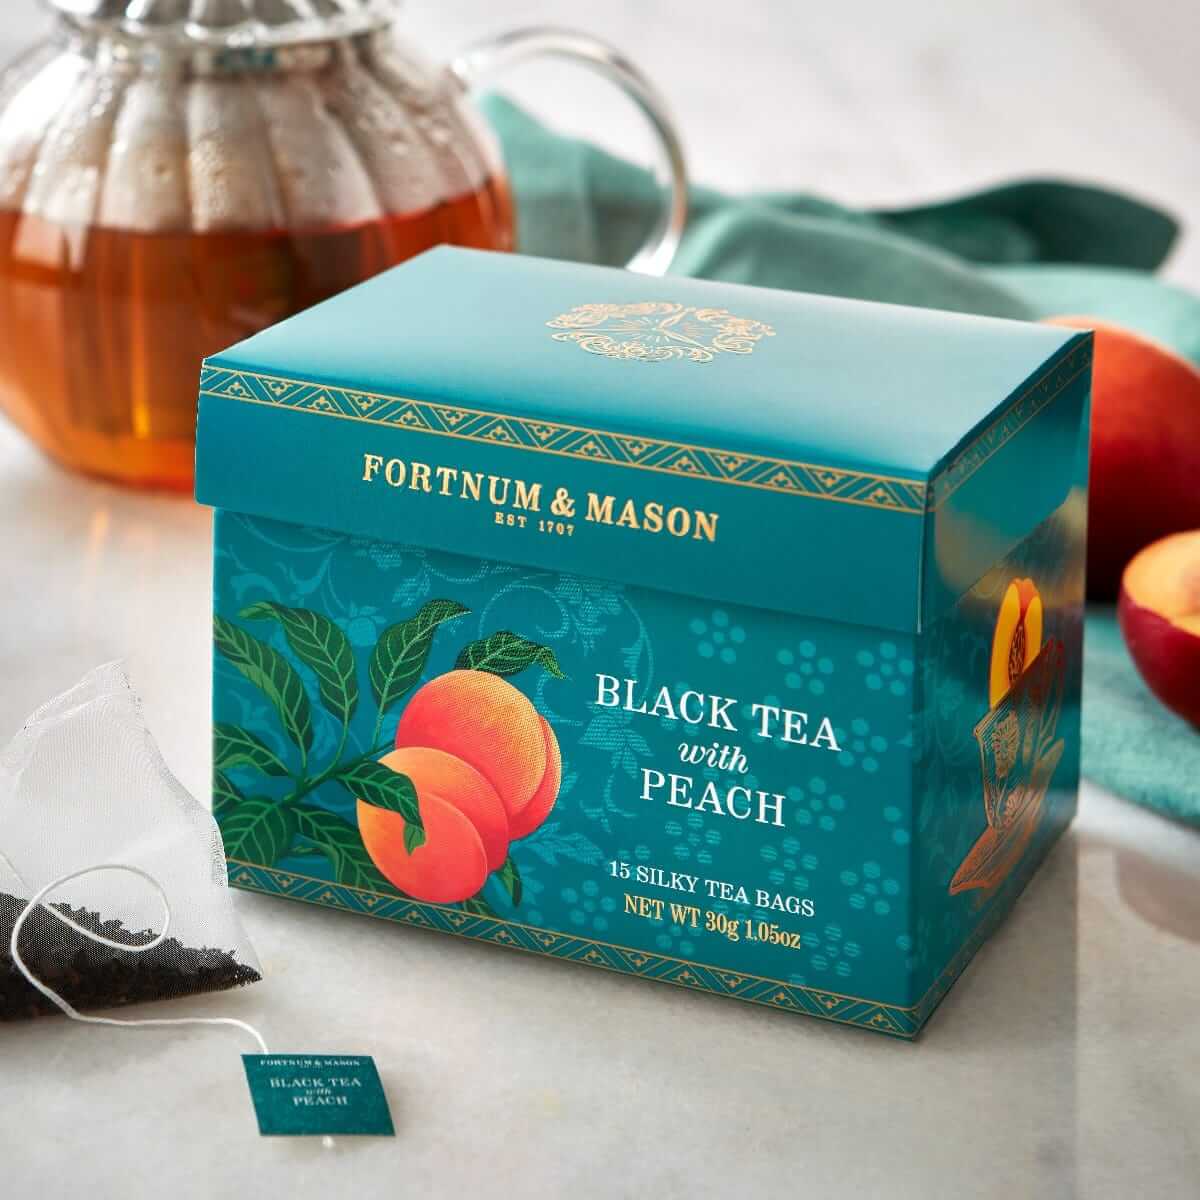 Black Tea with Peach, 15 Silky Tea Bags, 30g, Fortnum & Mason